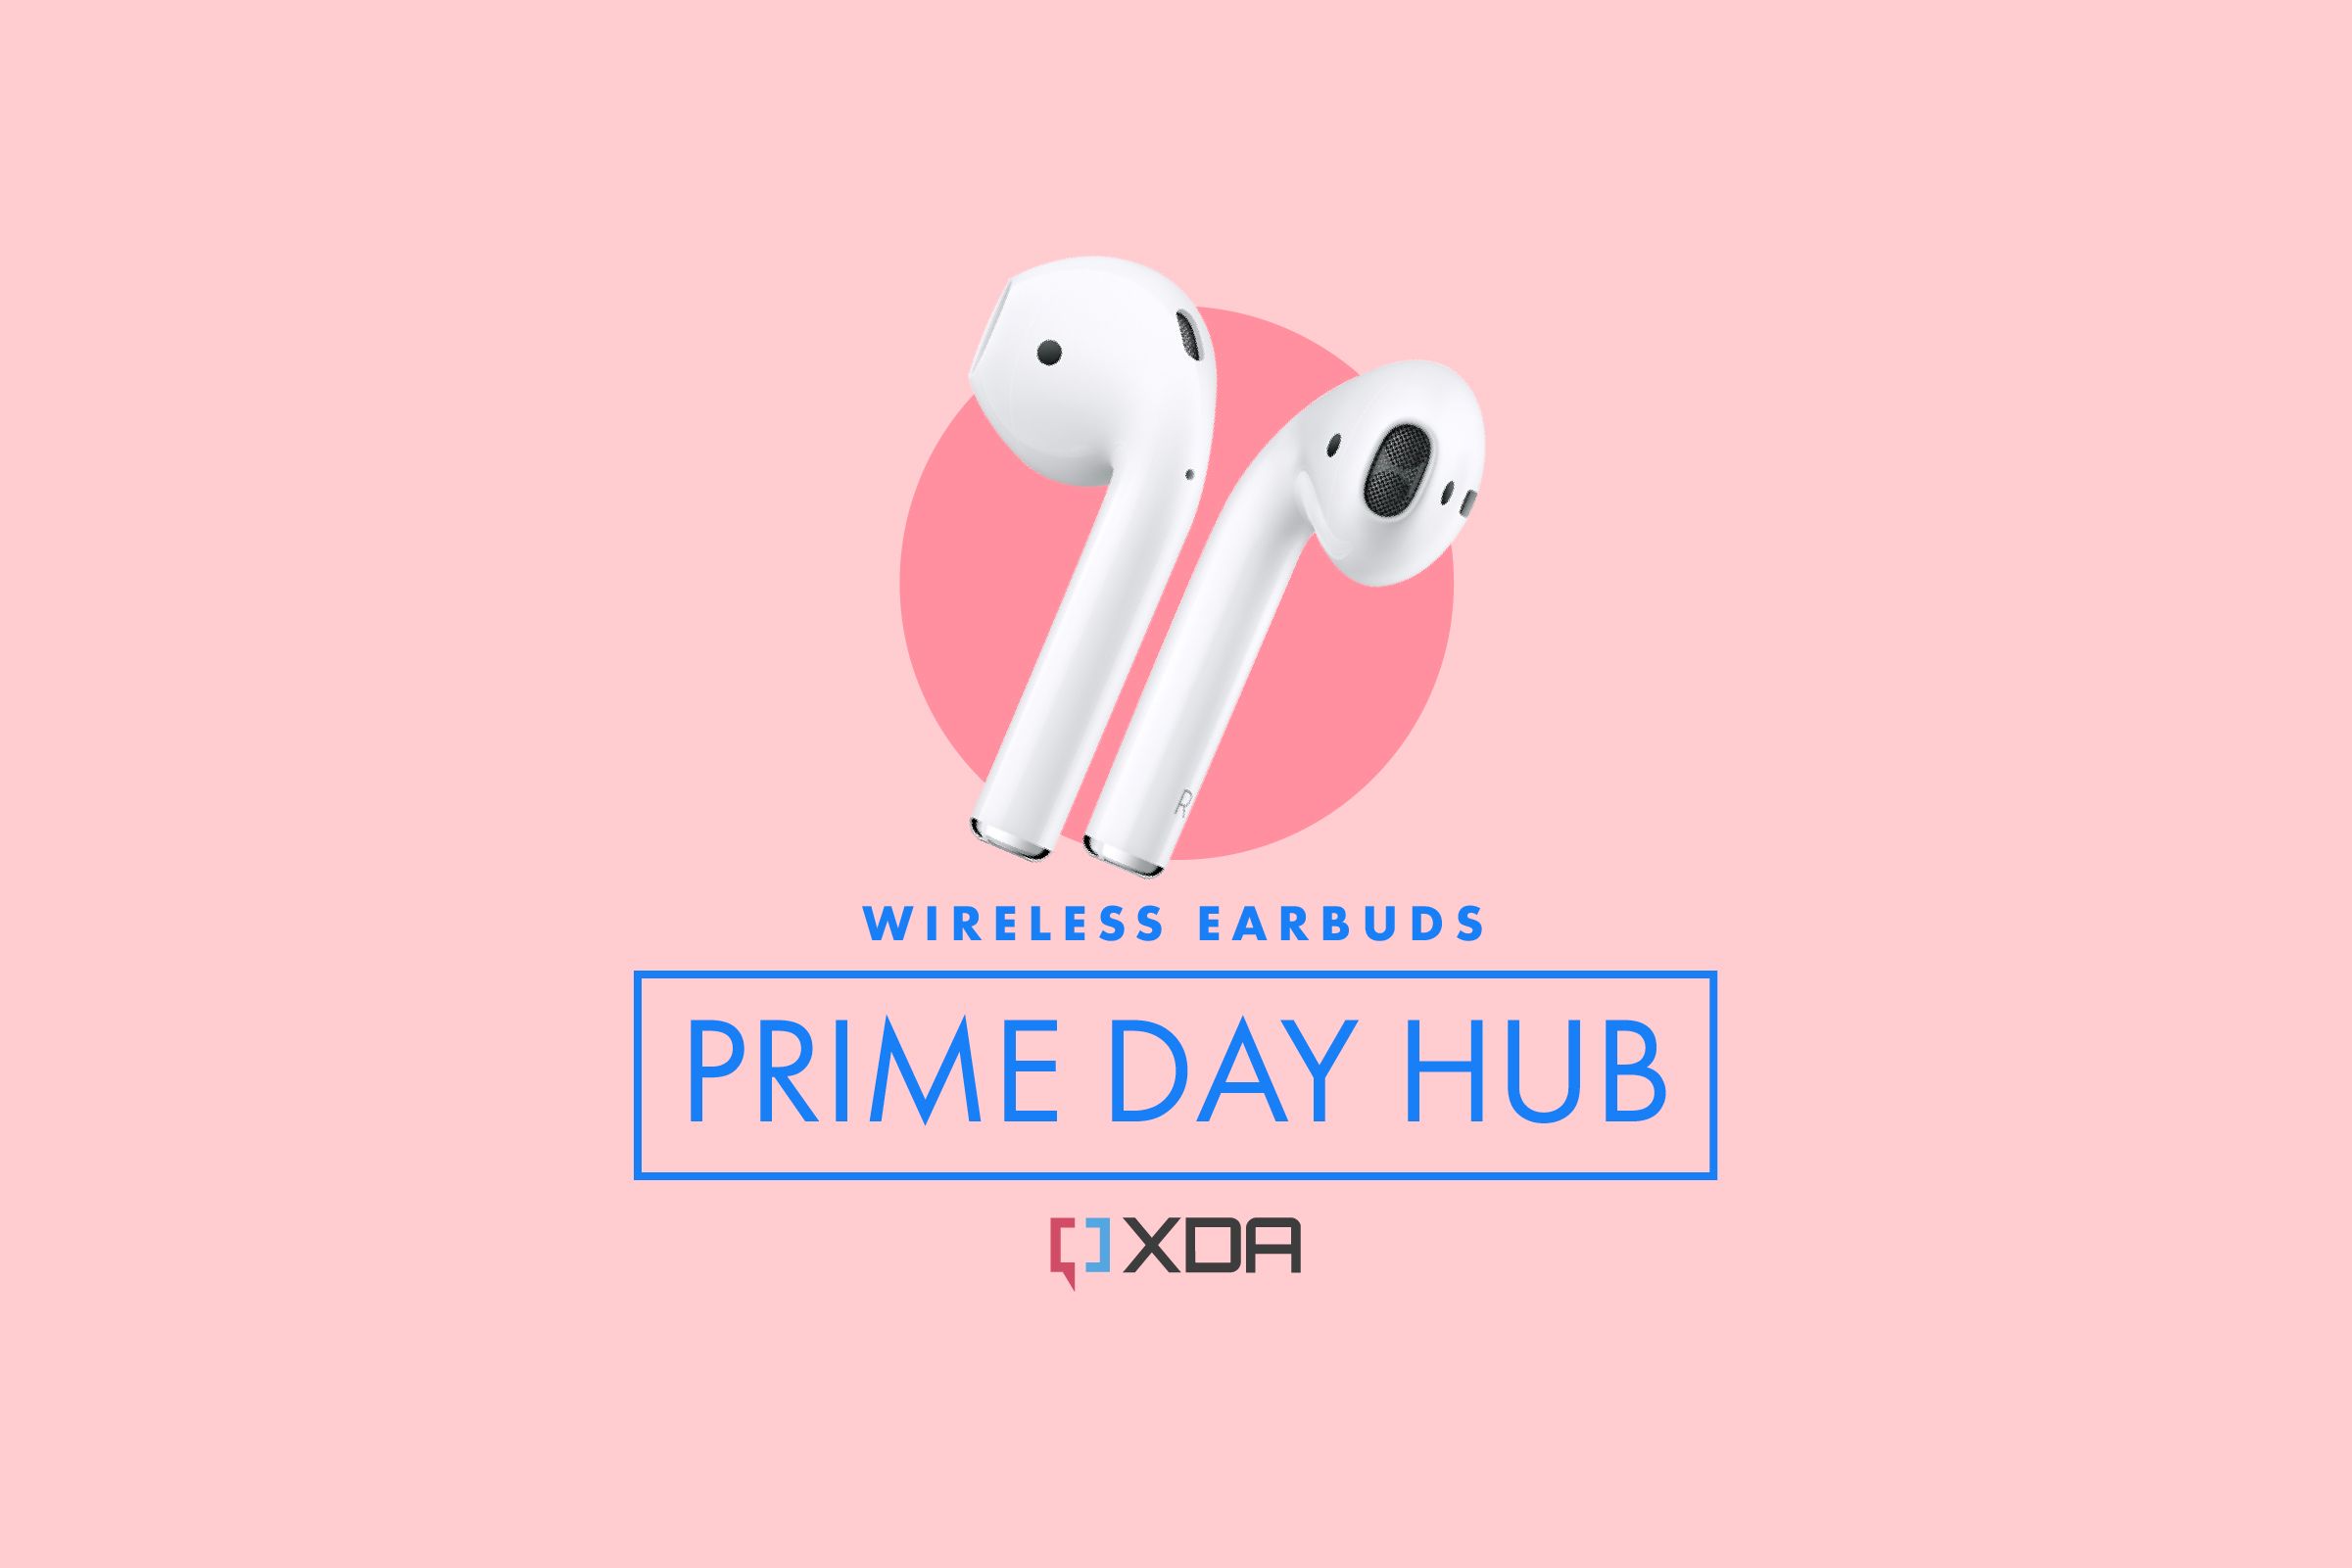 Wireless earbuds Prime Day hub